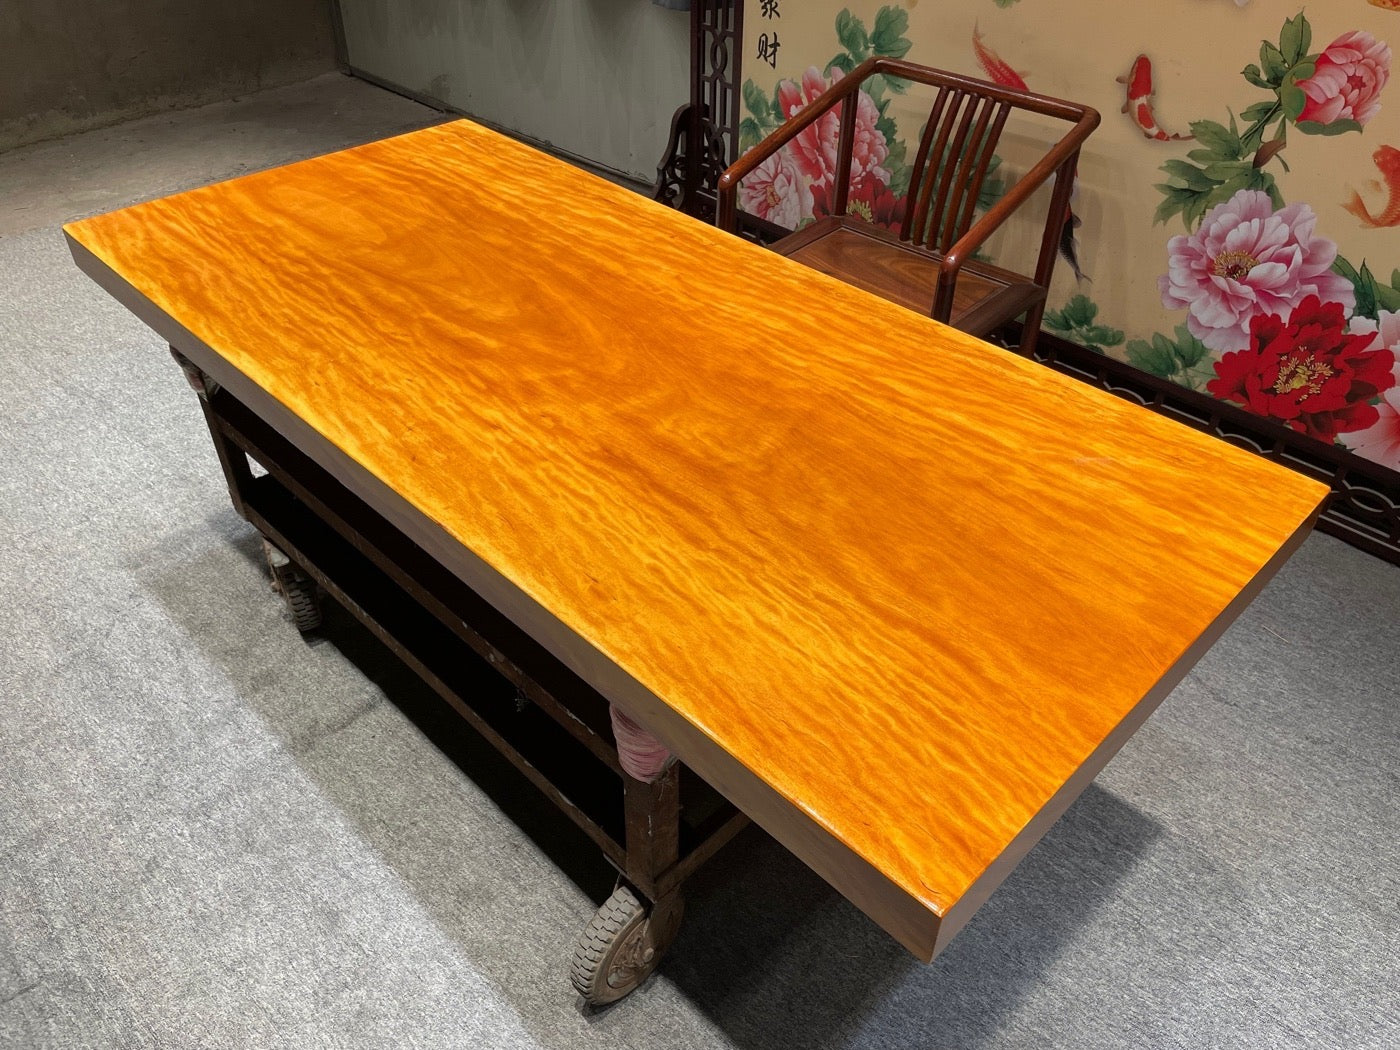 Escritorio de comedor personalizado de madera natural, mesa de color naranja